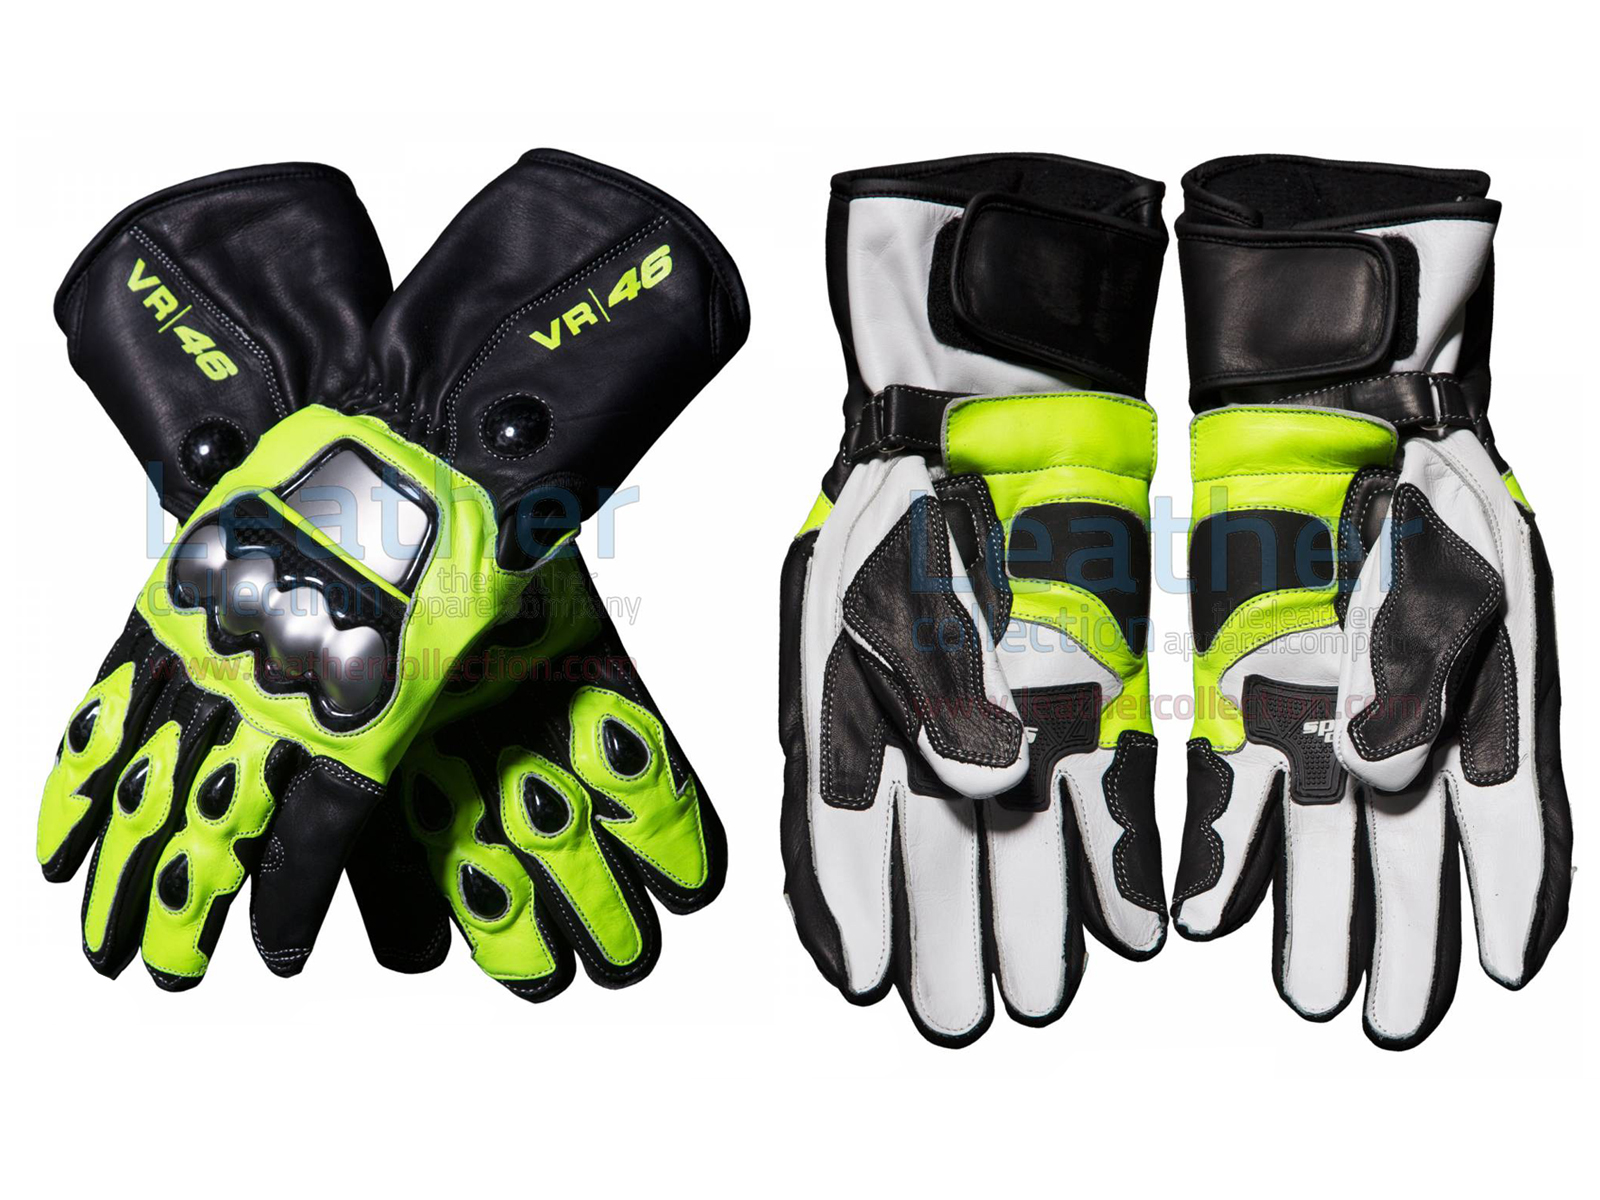 Valentino Rossi VR46 Racing Gloves